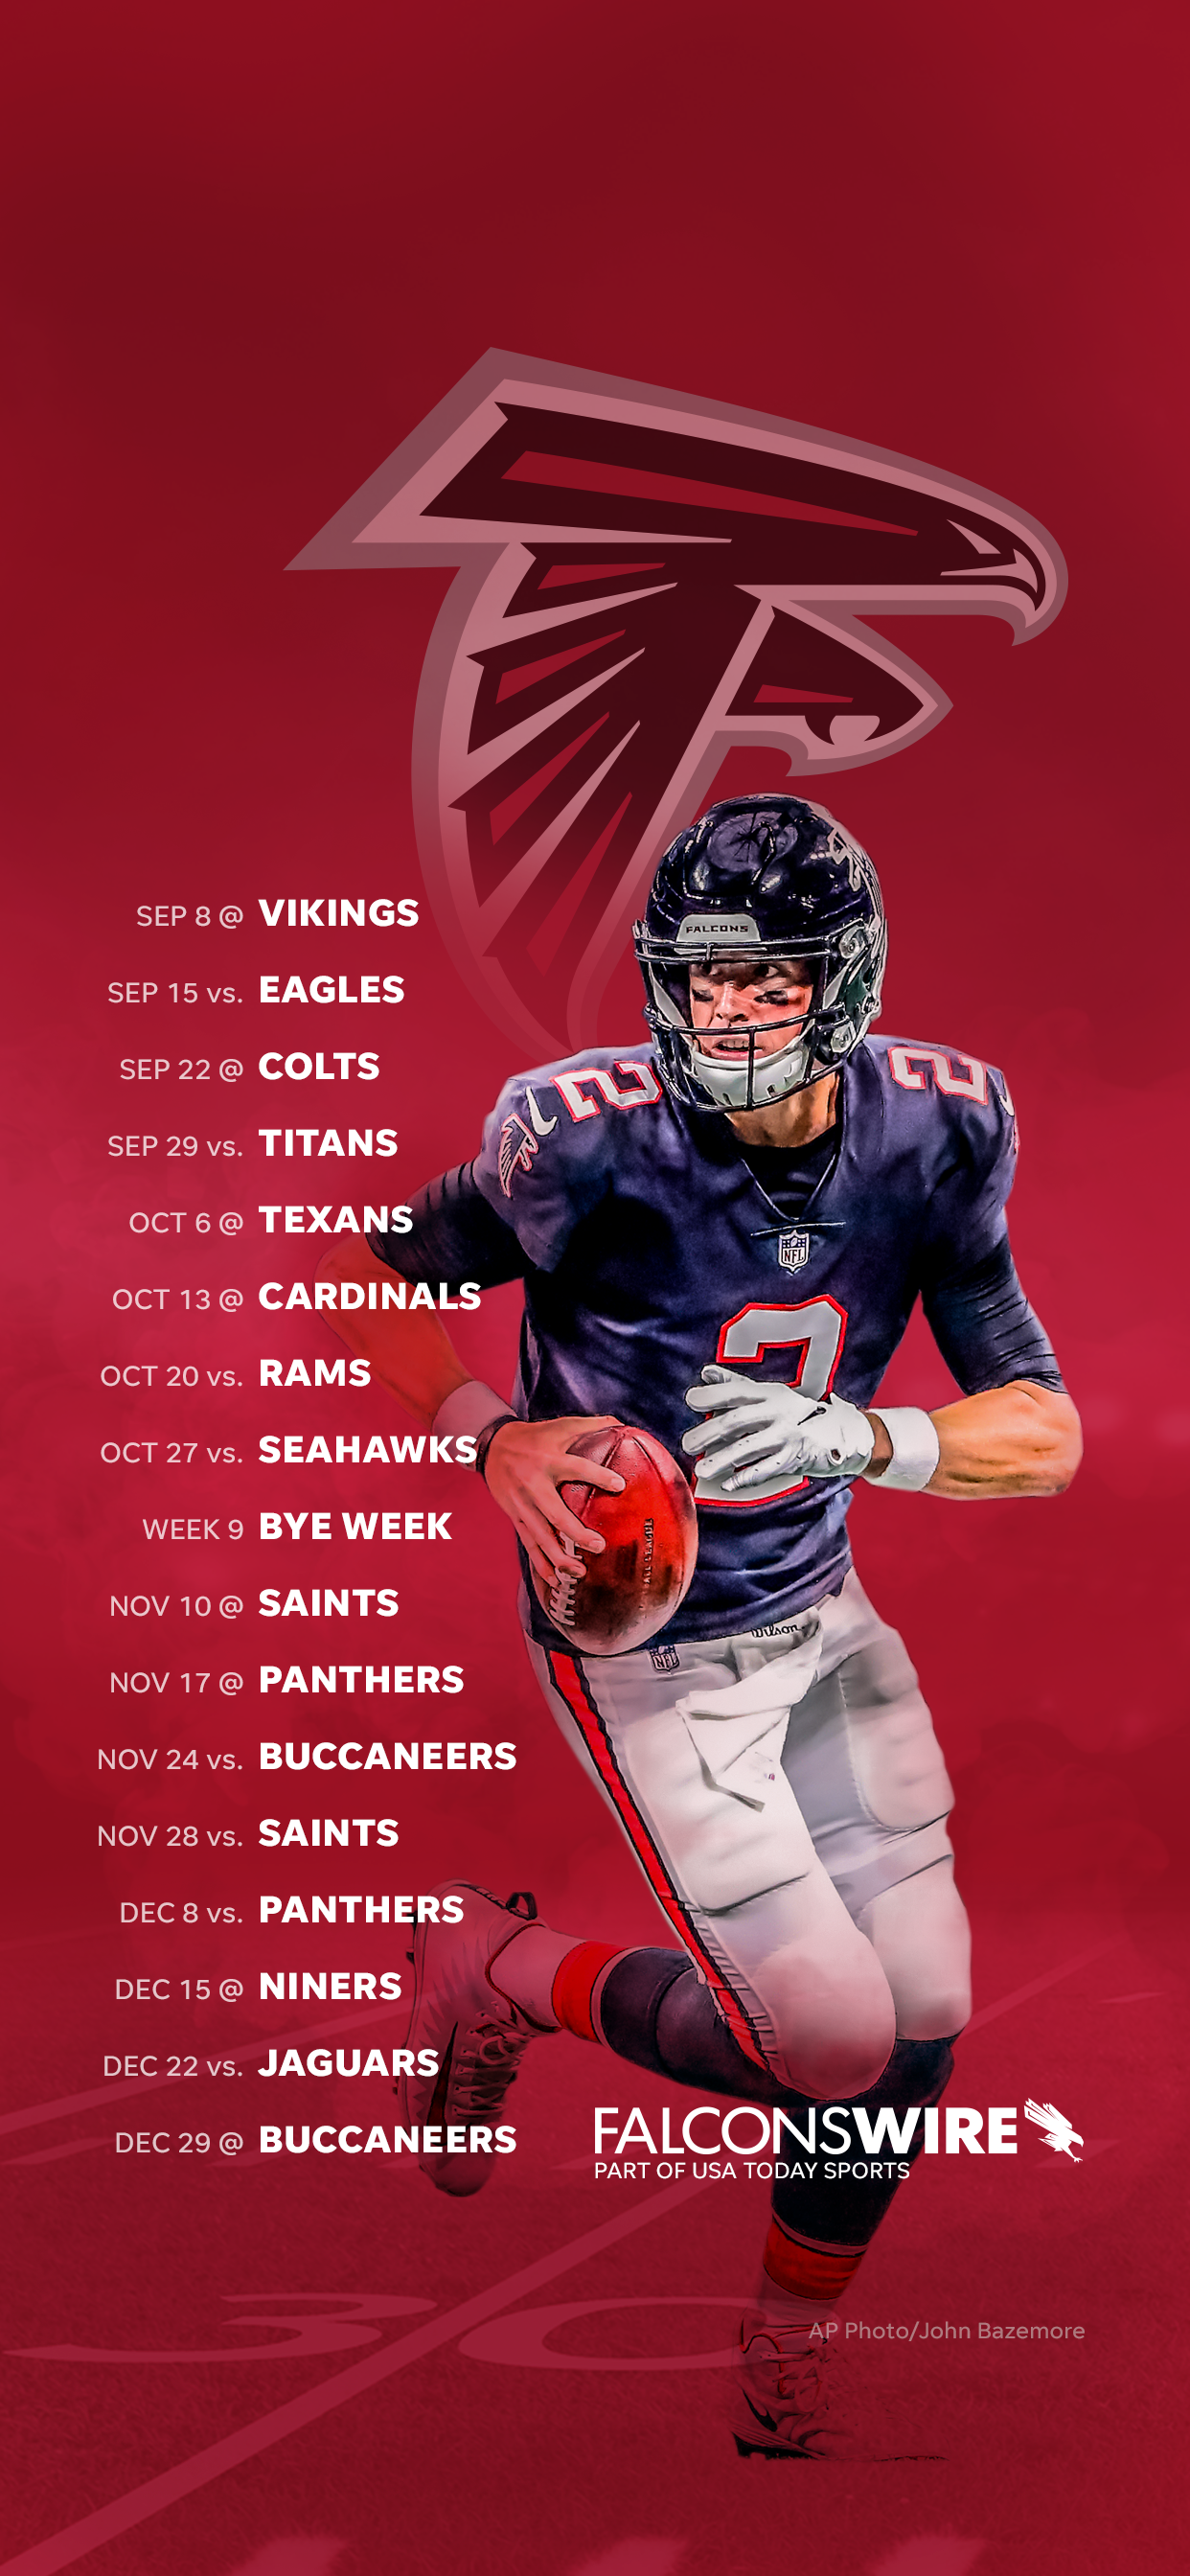 2019 Atlanta Falcons Football Schedule: Downloadable Wallpaper